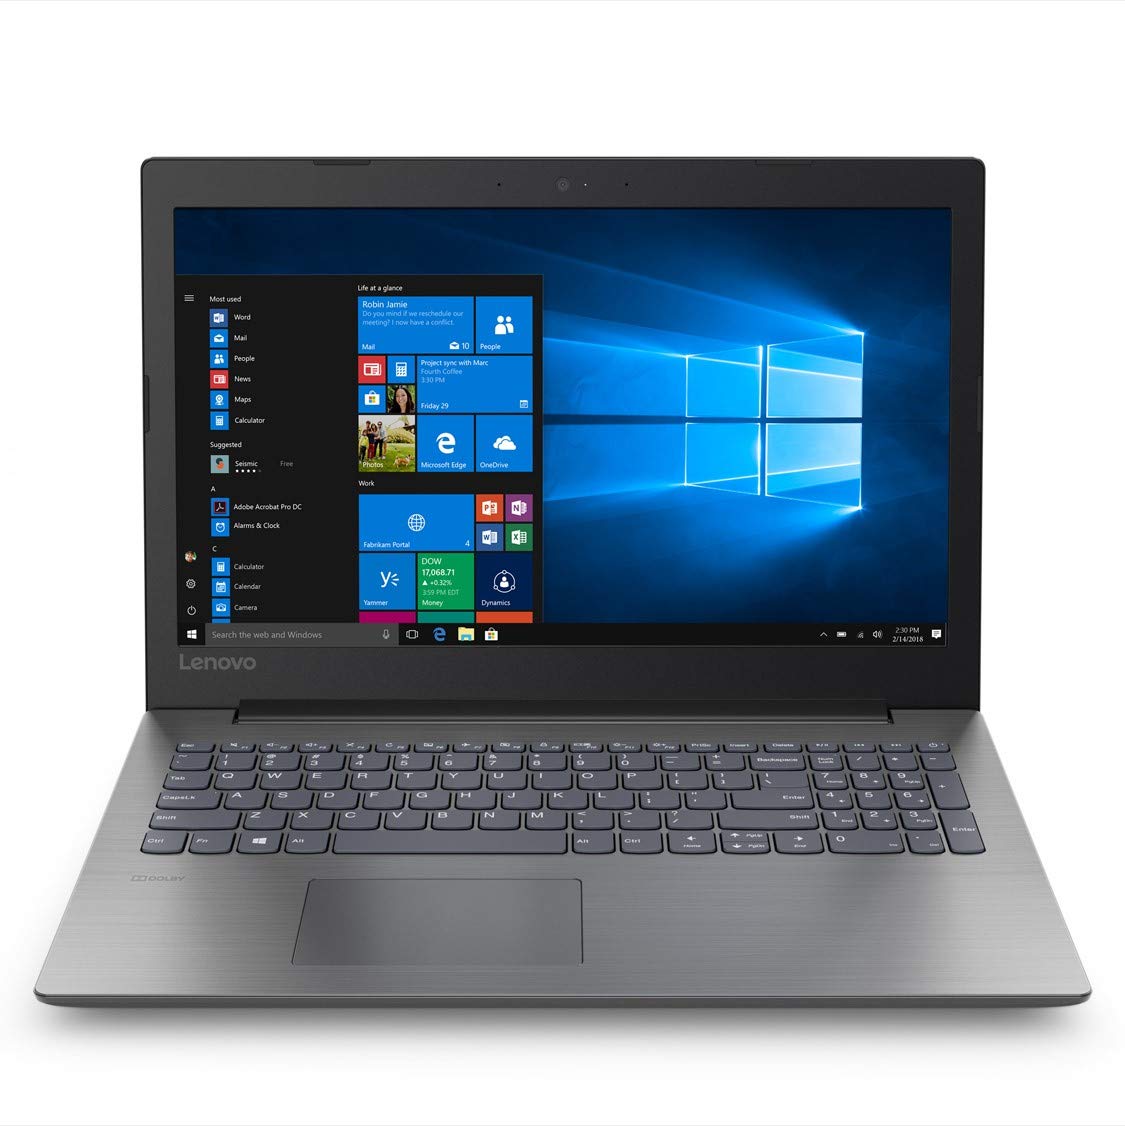 Lenovo Ideapad 330 Pentium Quad Core 8th Gen Laptop (4 GB/1 TB HDD/Windows 10 Home/ 15.6 inch / Platinum Grey/ with MS Office) 81D100JMIN